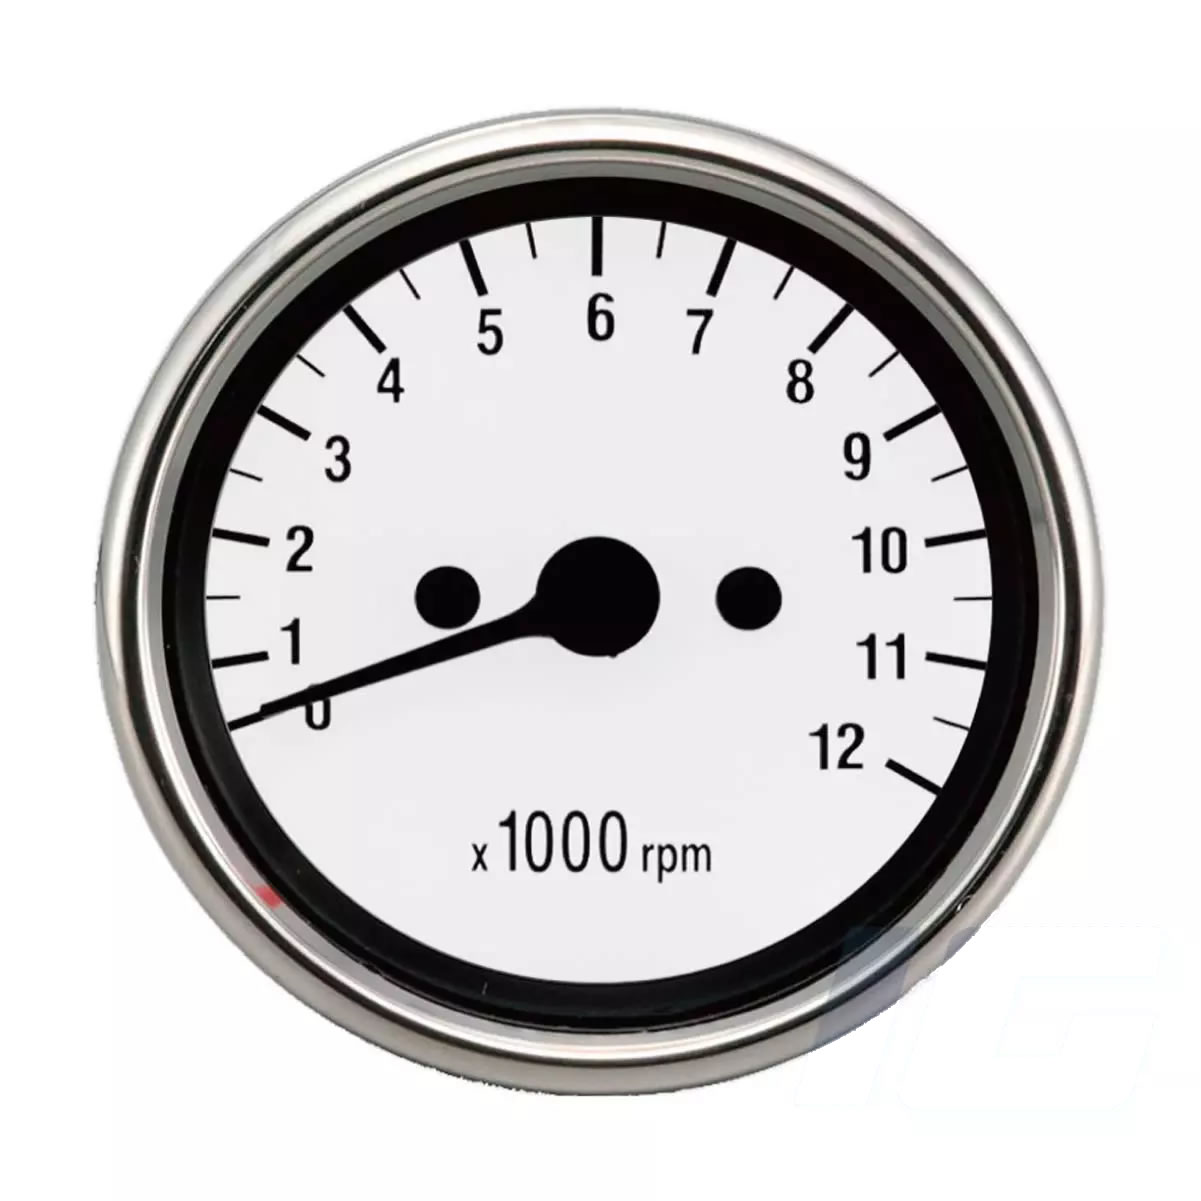 Aftermarket Gauge - Tachometer For Motorcycle